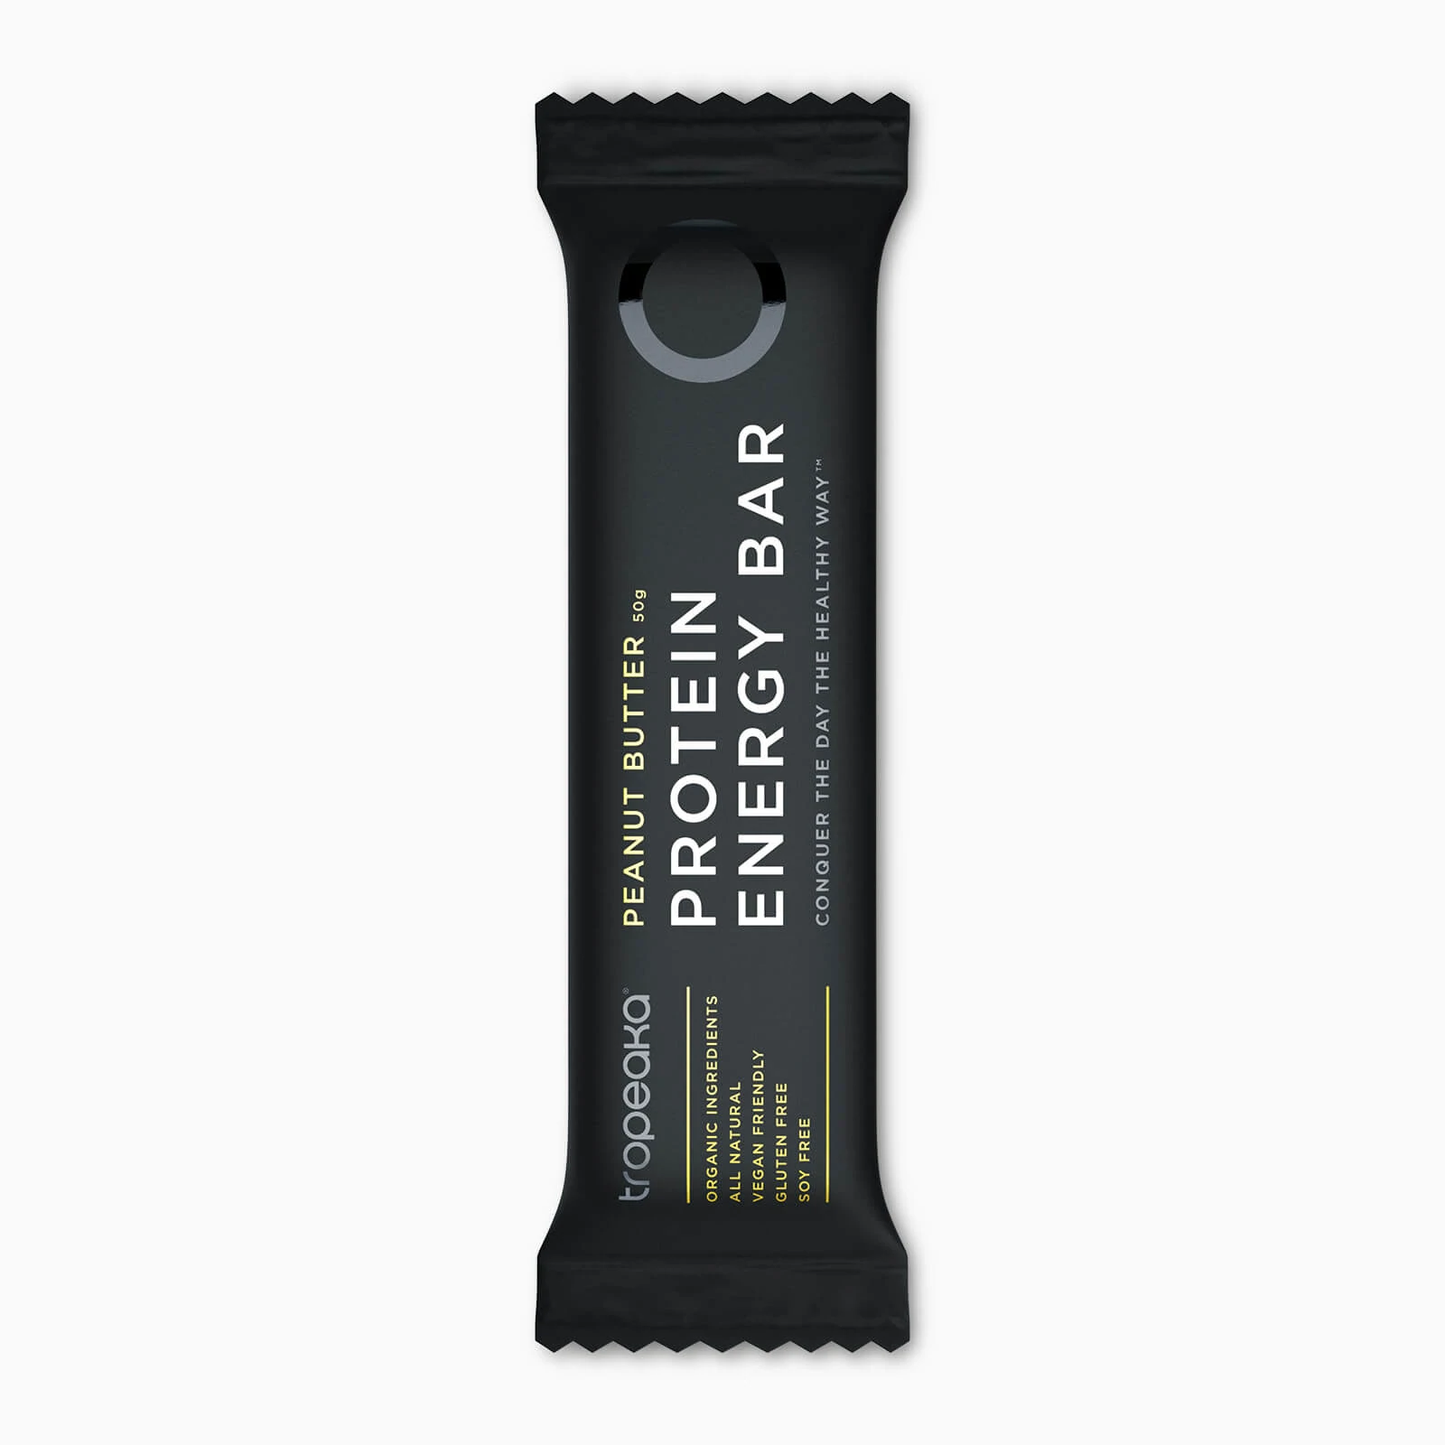 Tropeaka Protein Energy Bar 50g, Peanut Butter